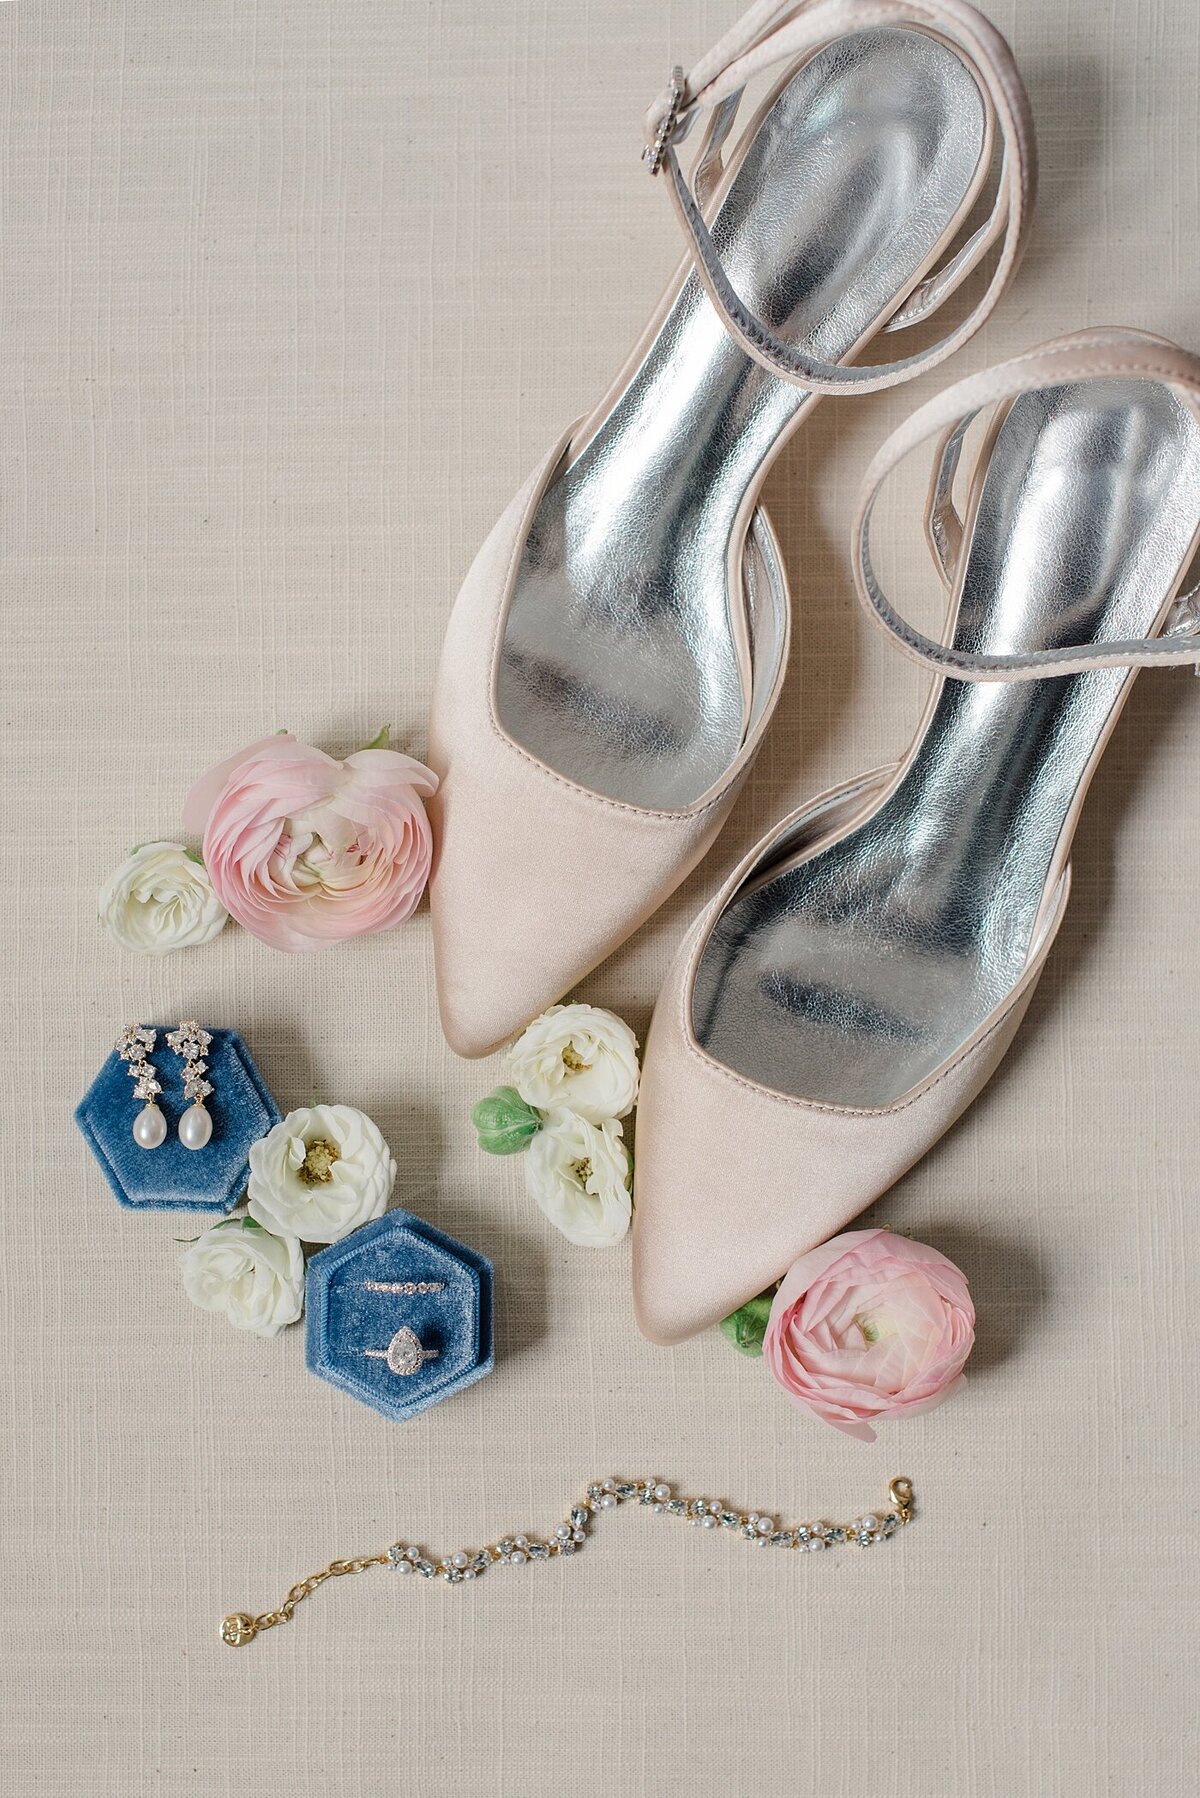 Ohio Wedding Photographer styled wedding shoes and rings at Ohio wedding in downtown Columbus, Ohio